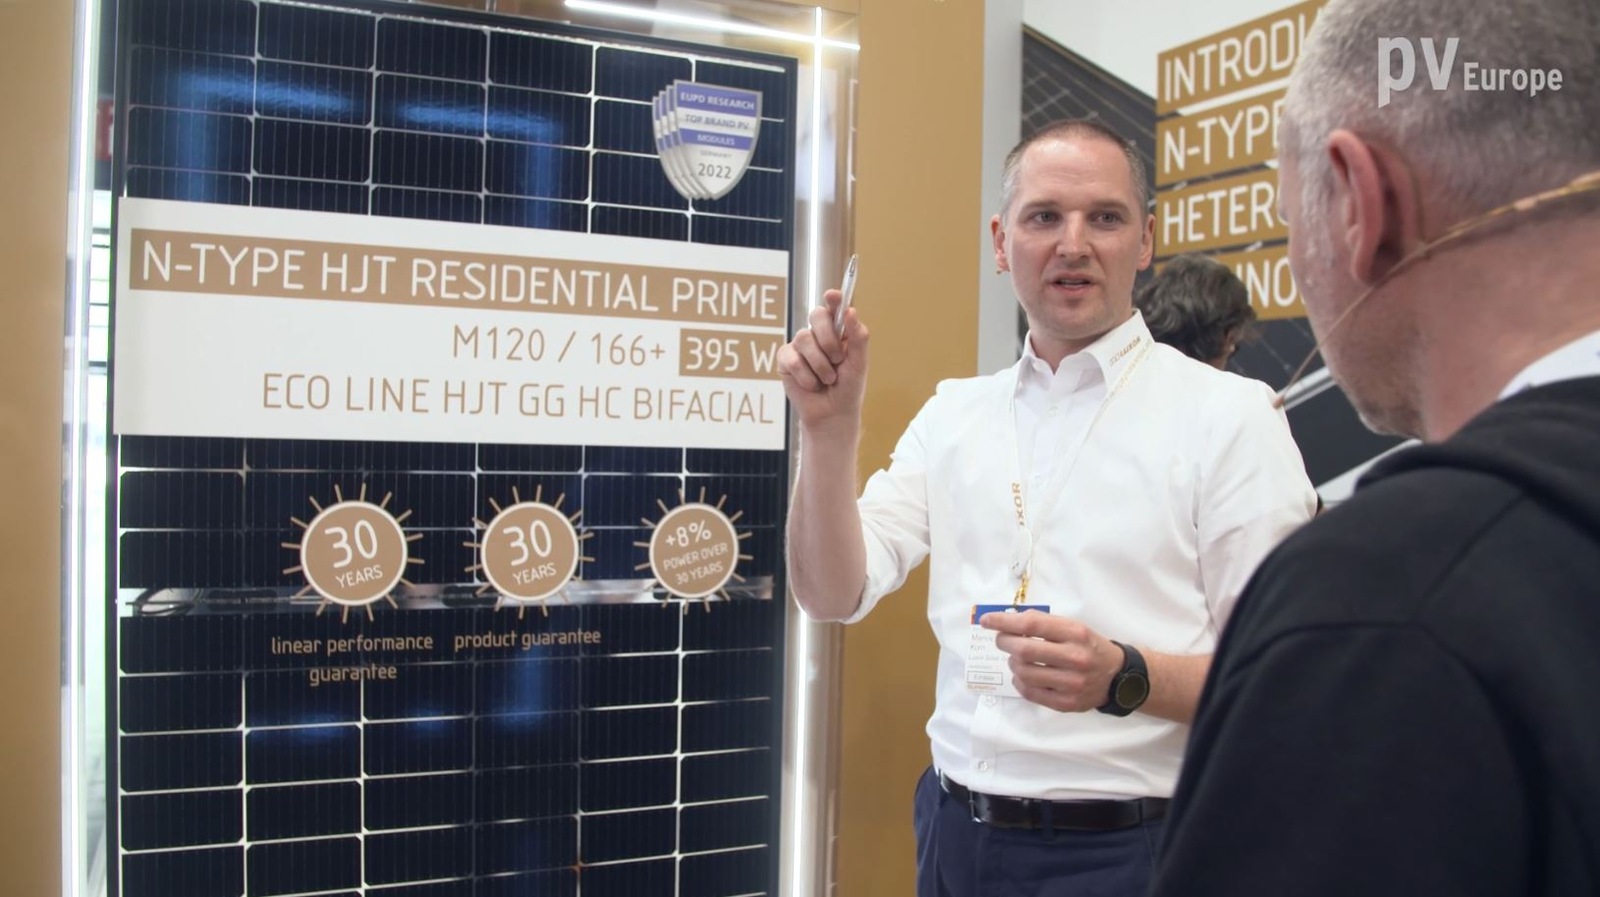 Marius Korn of Luxor Solar: Permanently more solar yield